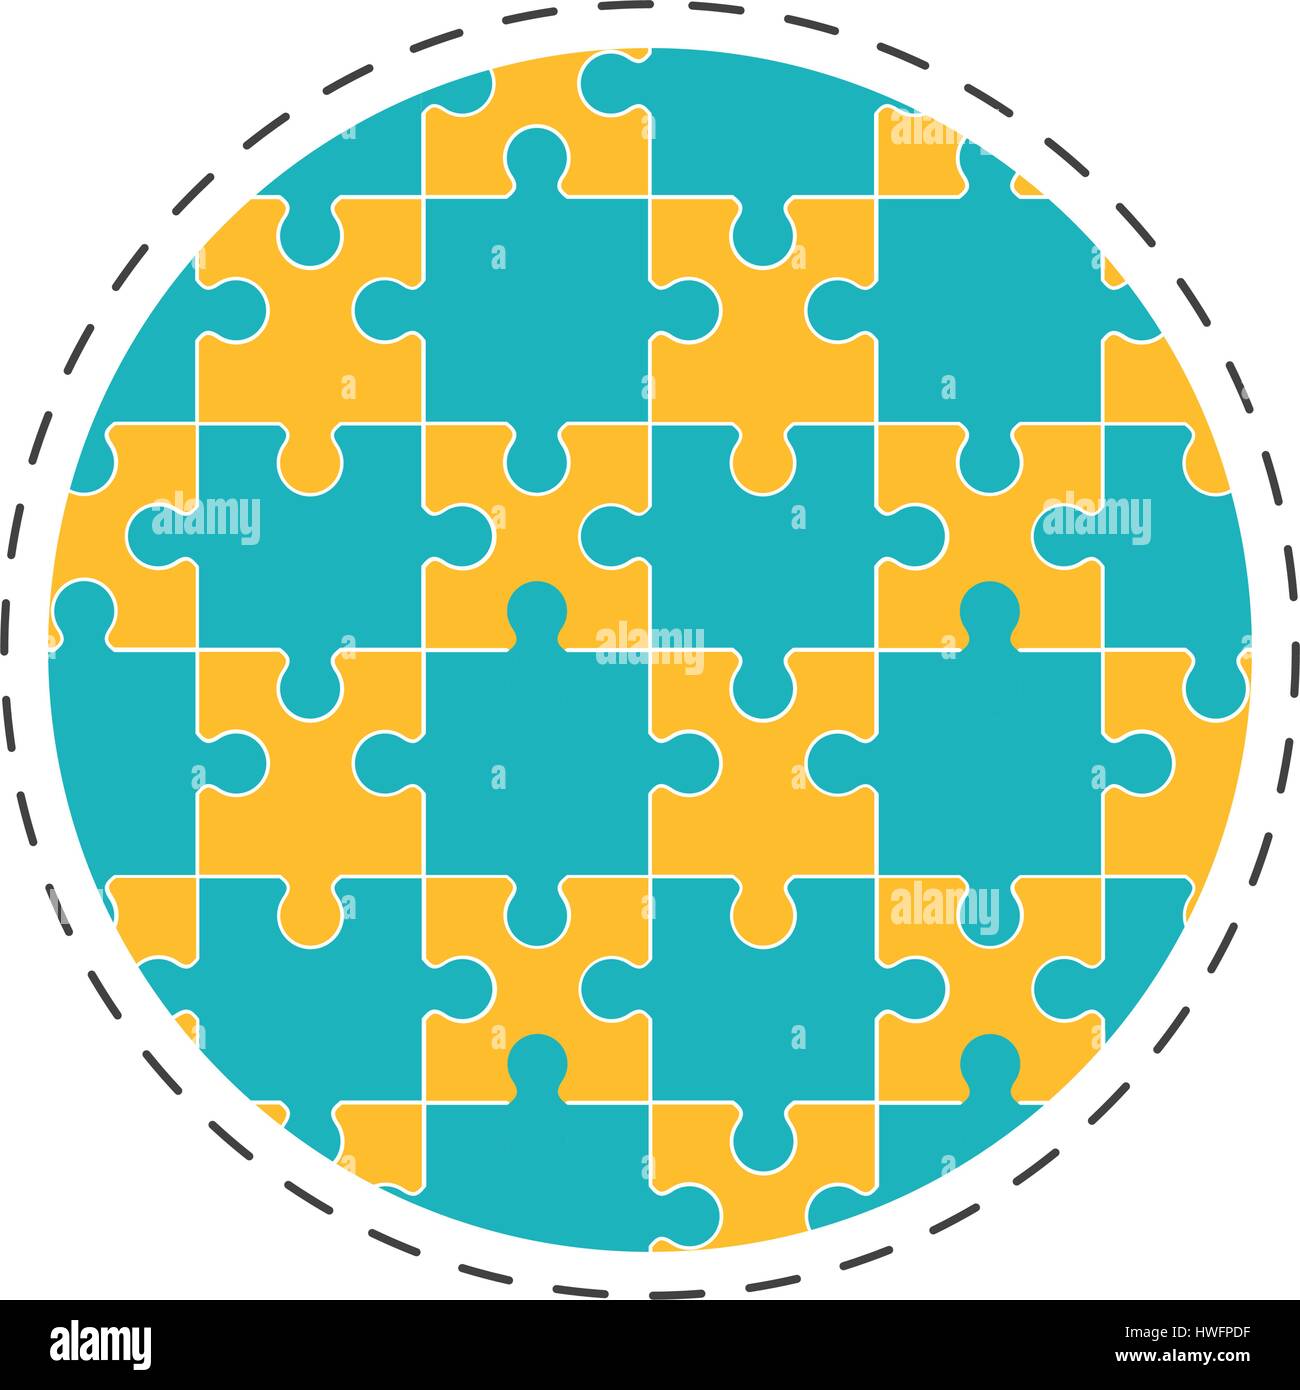 Runde Lösung Puzzlebild Sammlung Stock-Vektorgrafik - Alamy